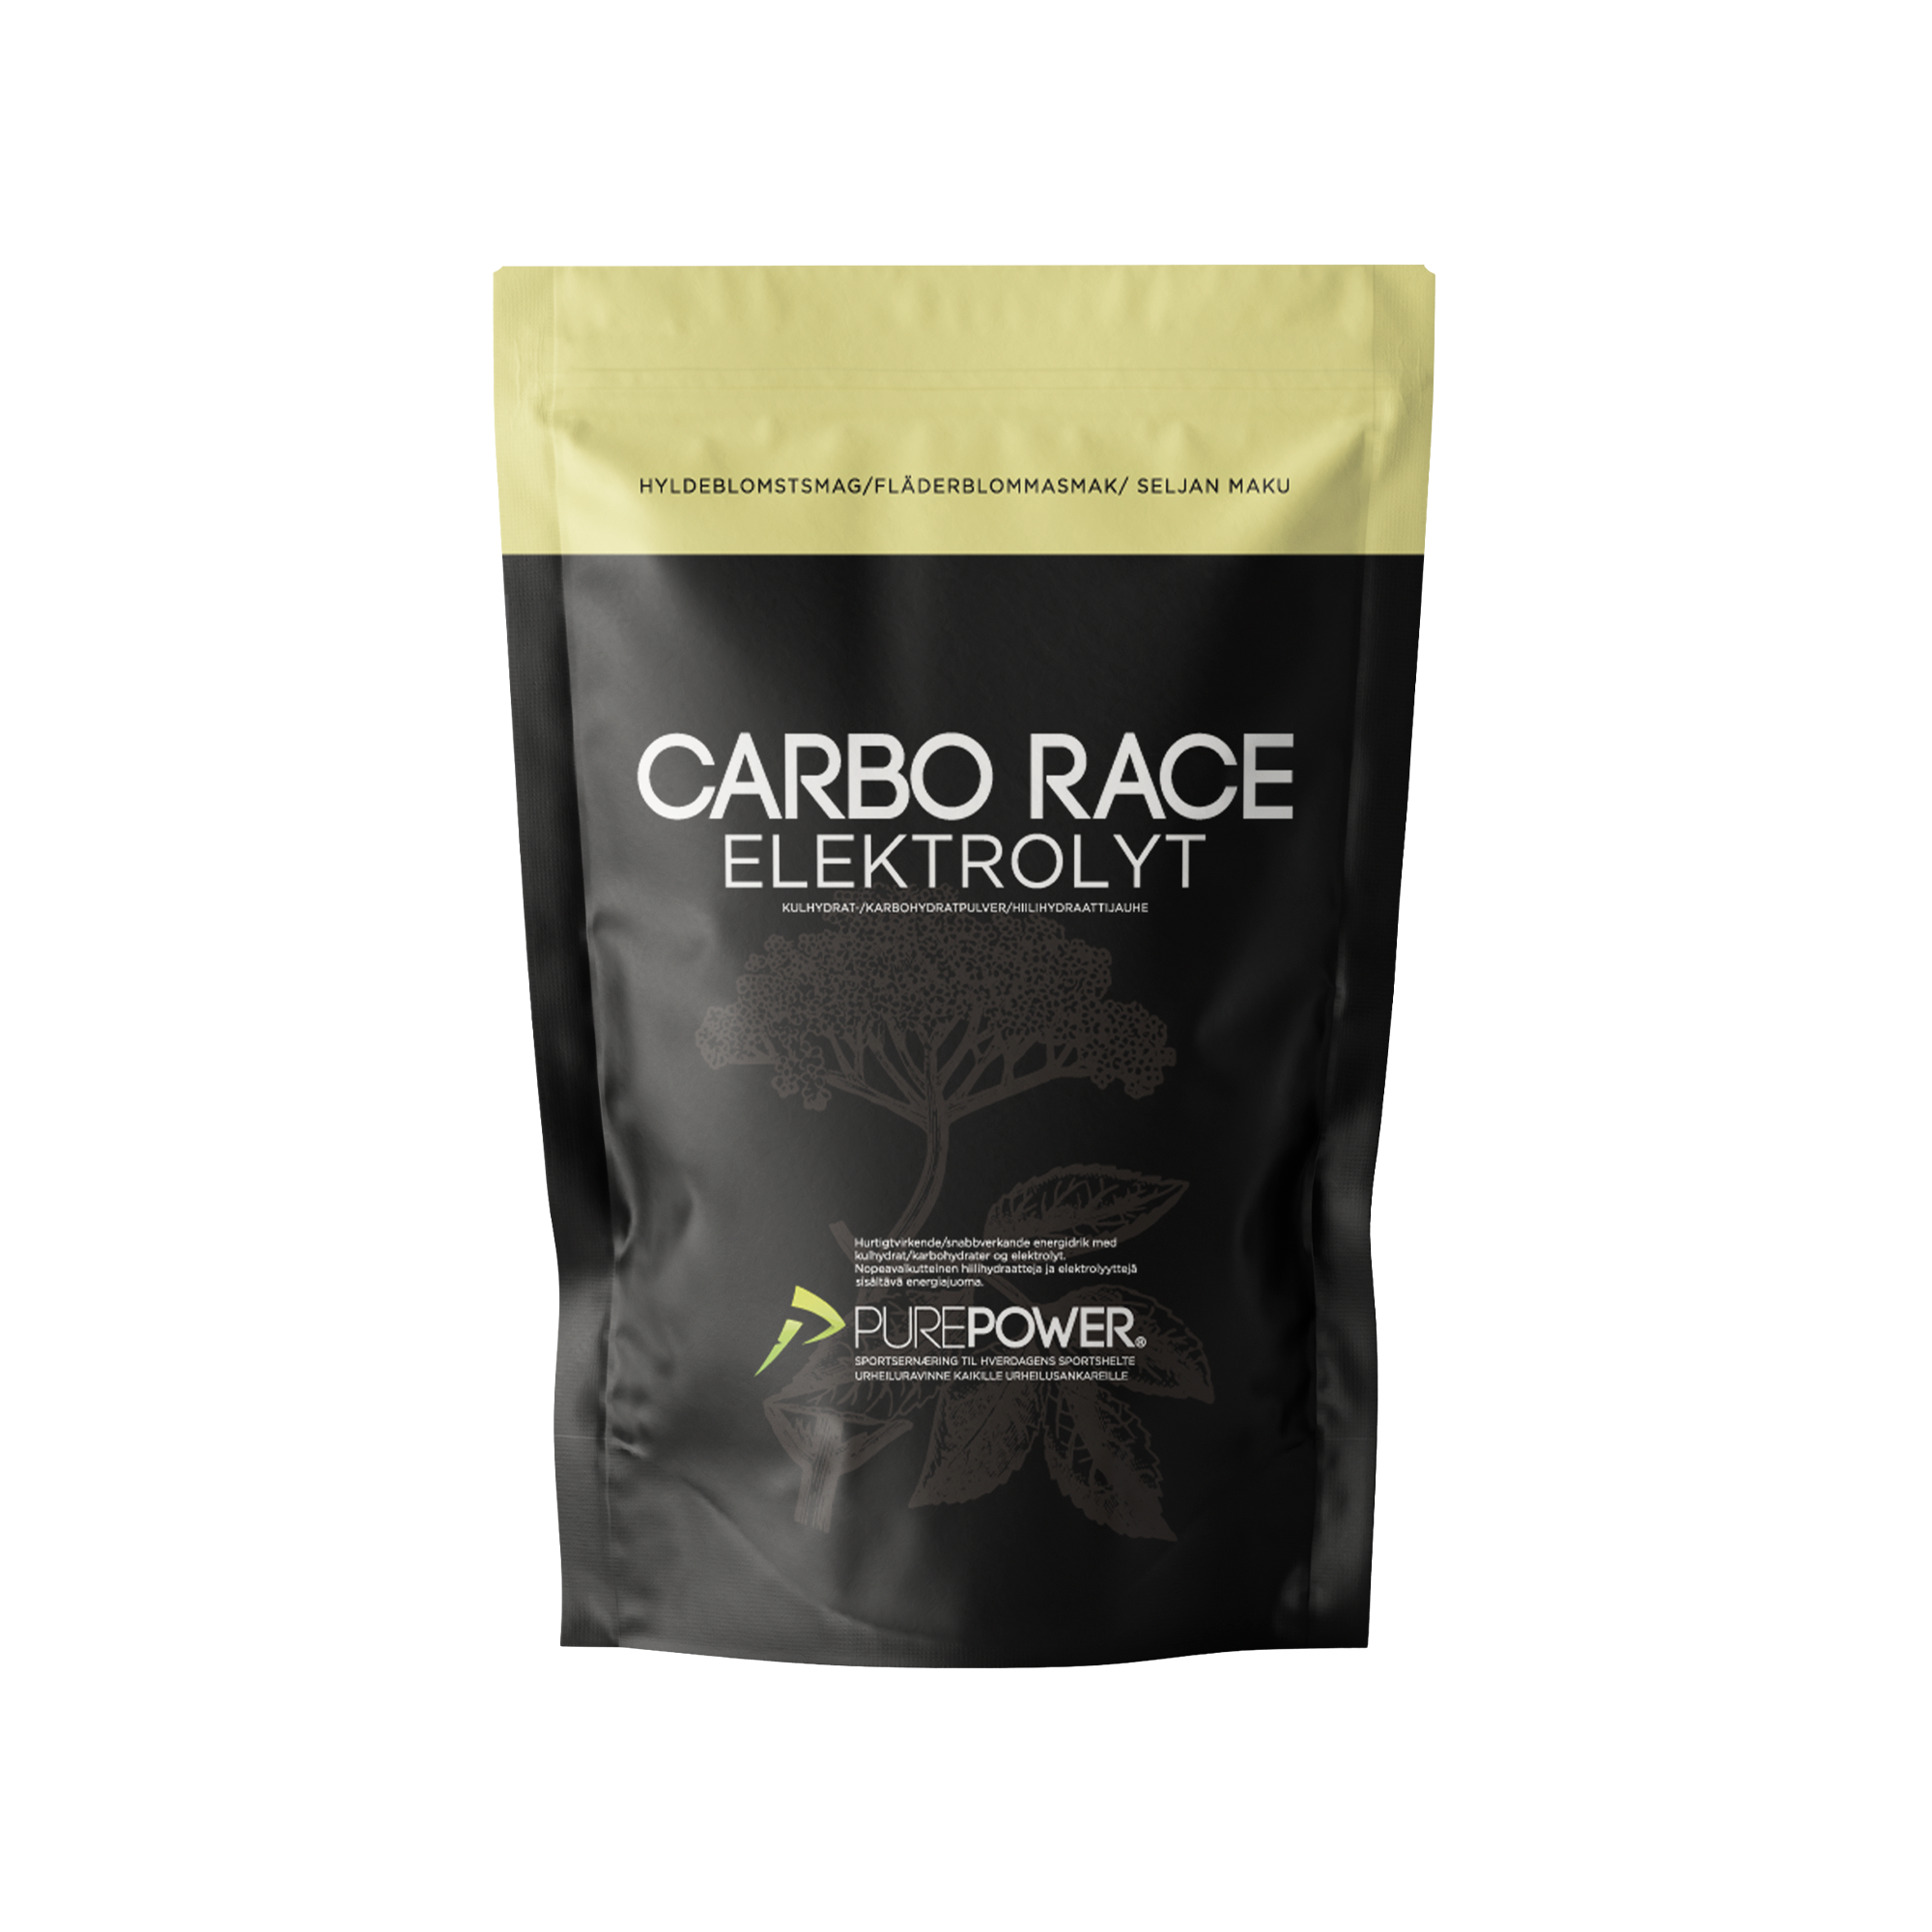 PurePower Carbo Race Elektrolyt Hyldeblomst 1 kg